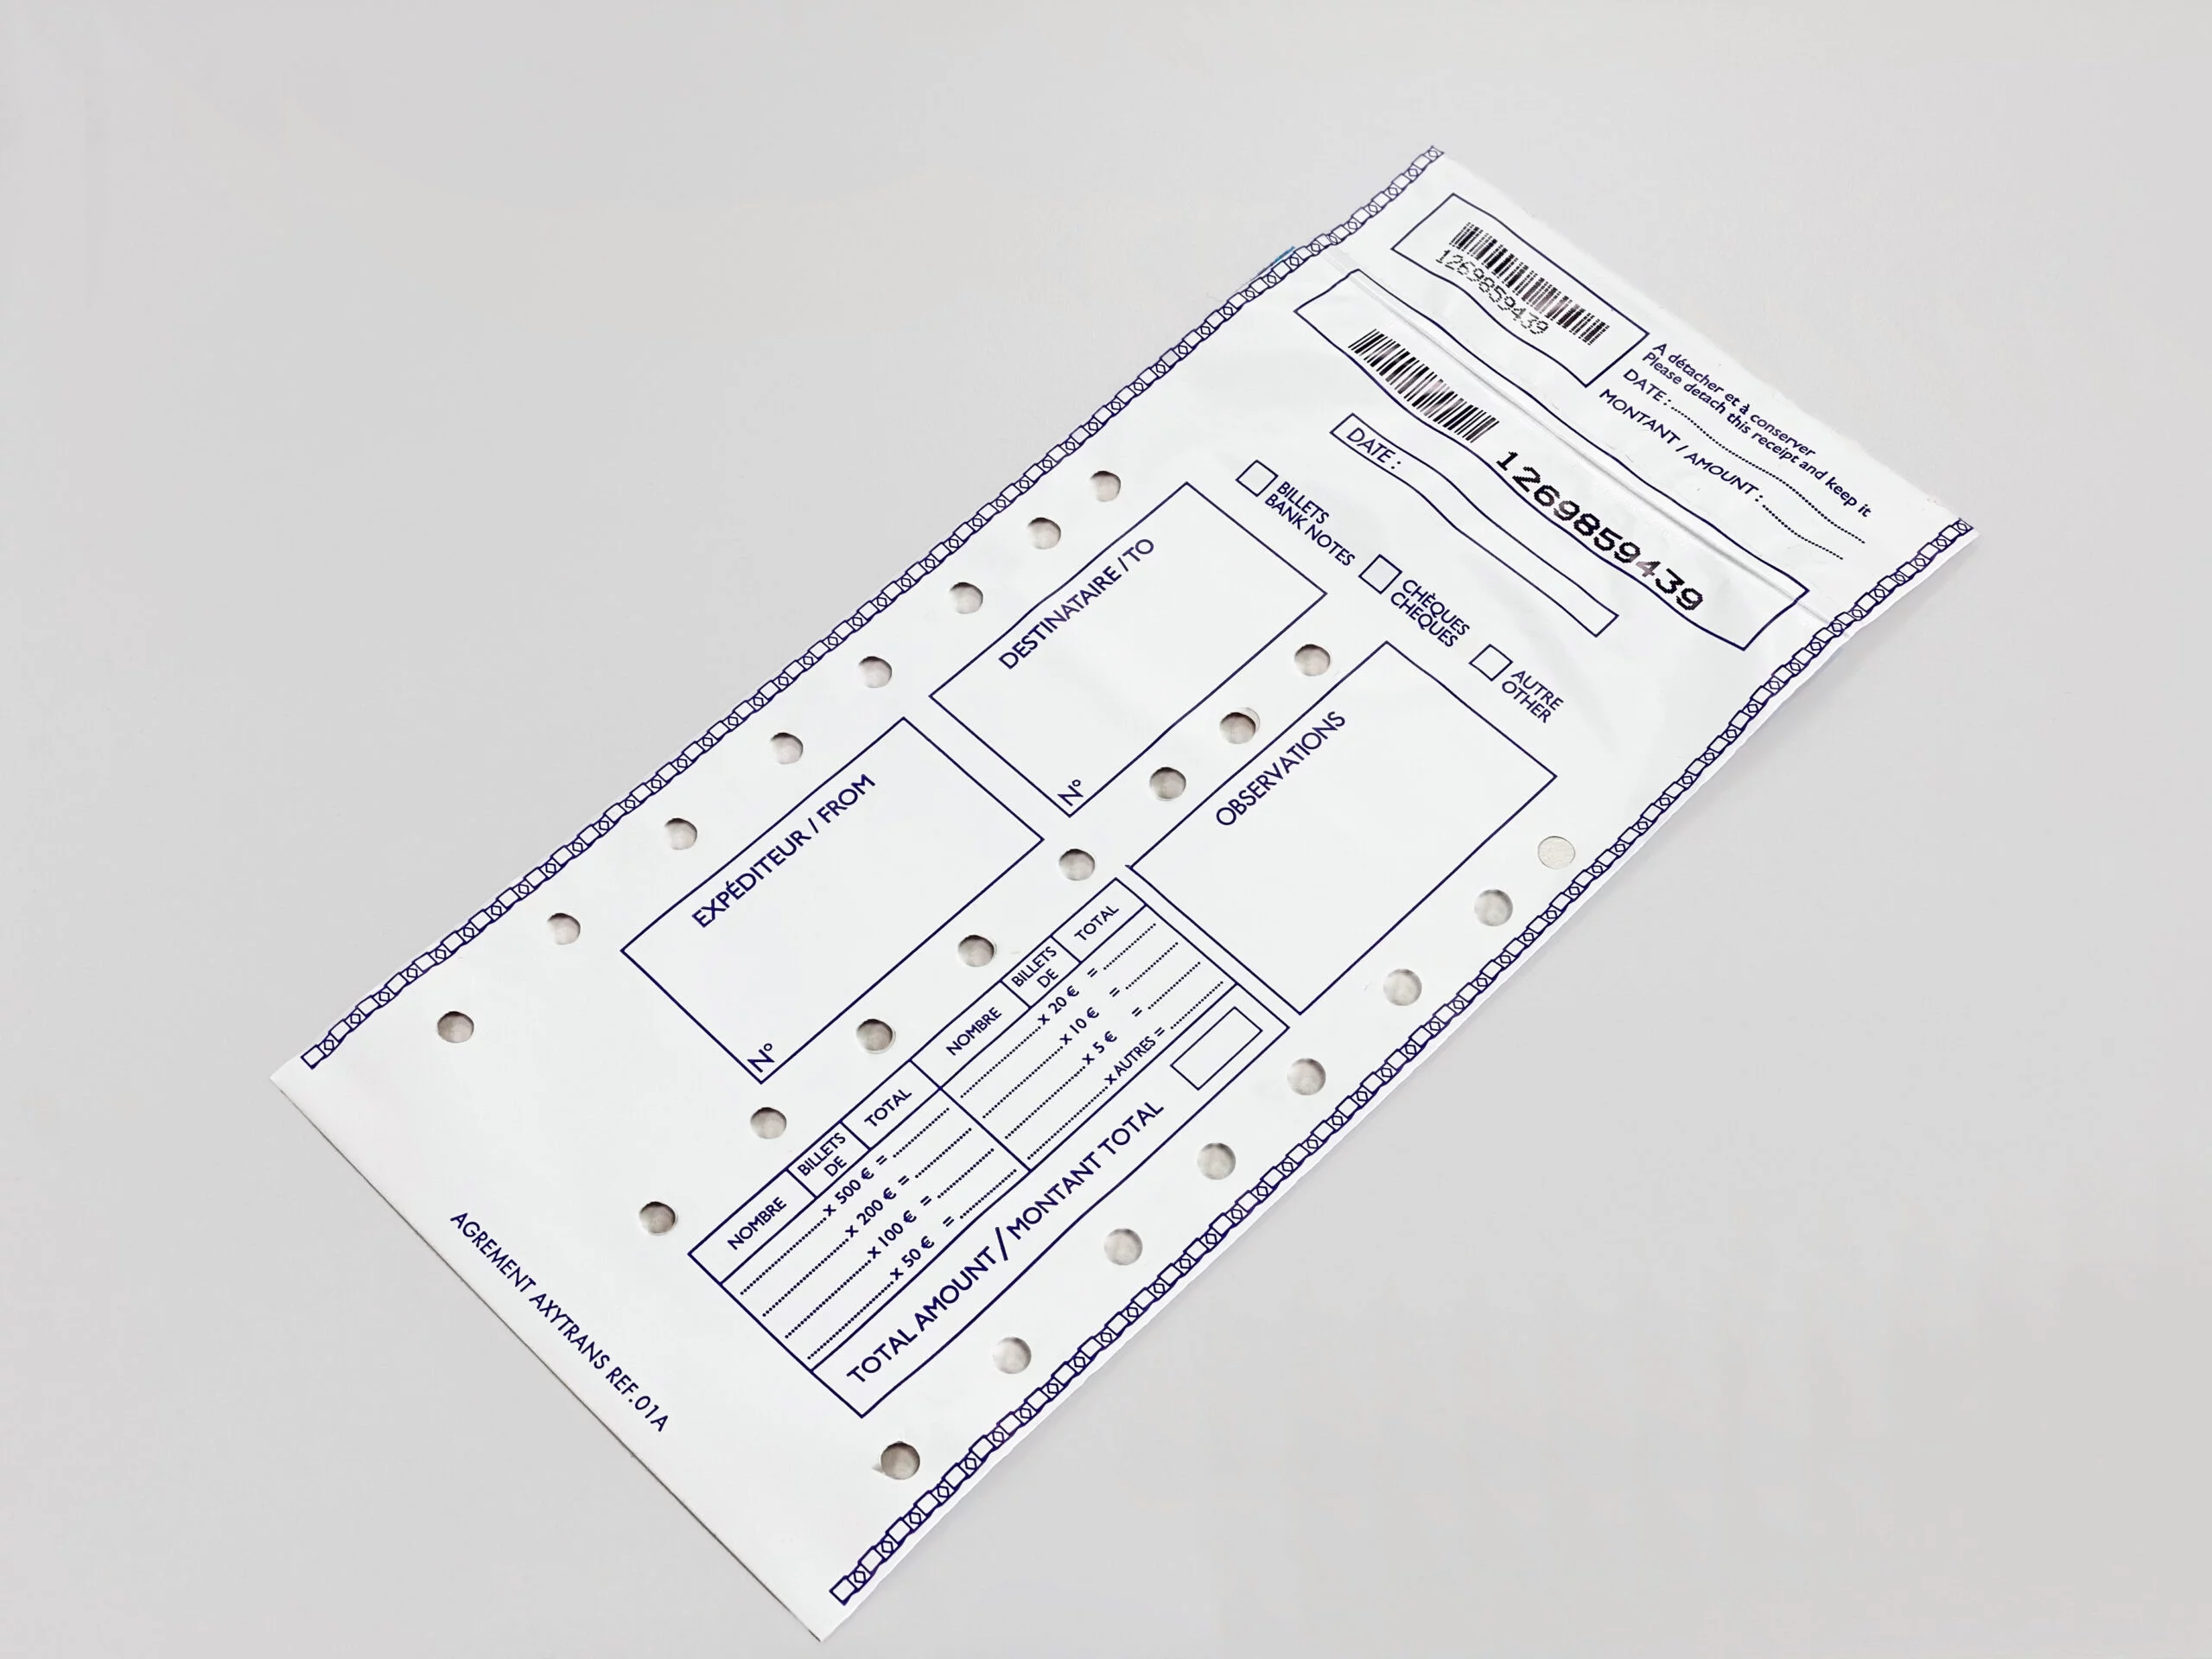 500 Enveloppes plastique opaques 80 microns N°2 245x325mm - Harry plast